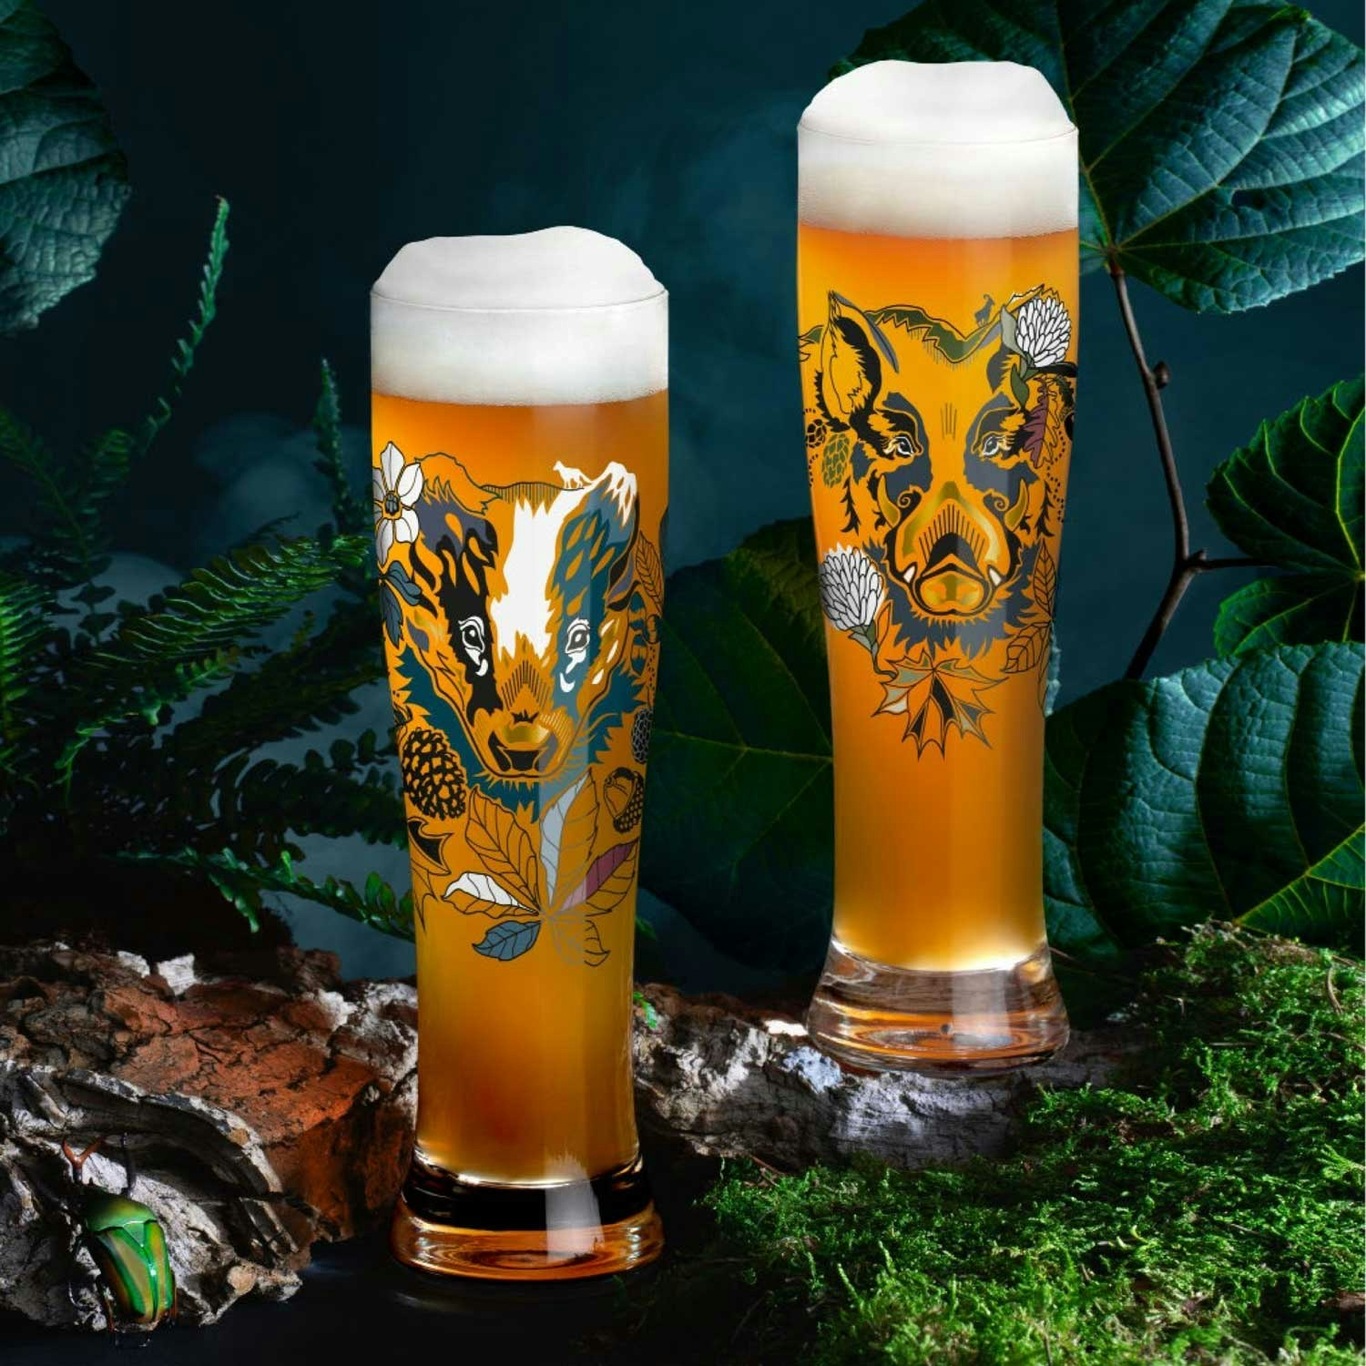 https://royaldesign.com/image/2/ritzenhoff-brauchzeit-beer-glass-2-pack-7-8-2?w=800&quality=80